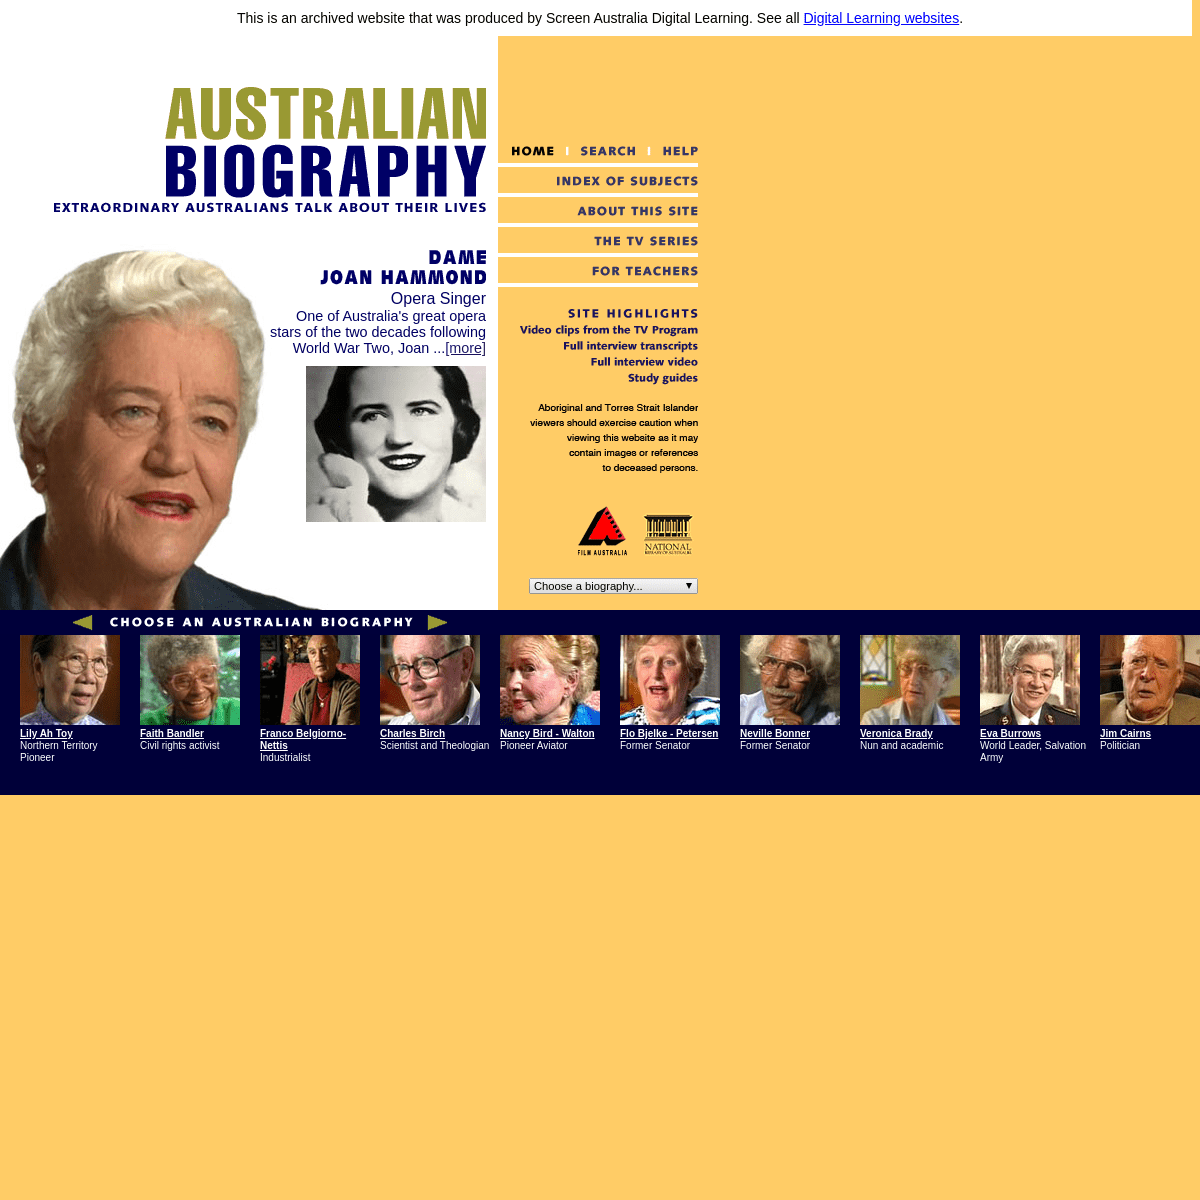 A complete backup of australianbiography.gov.au